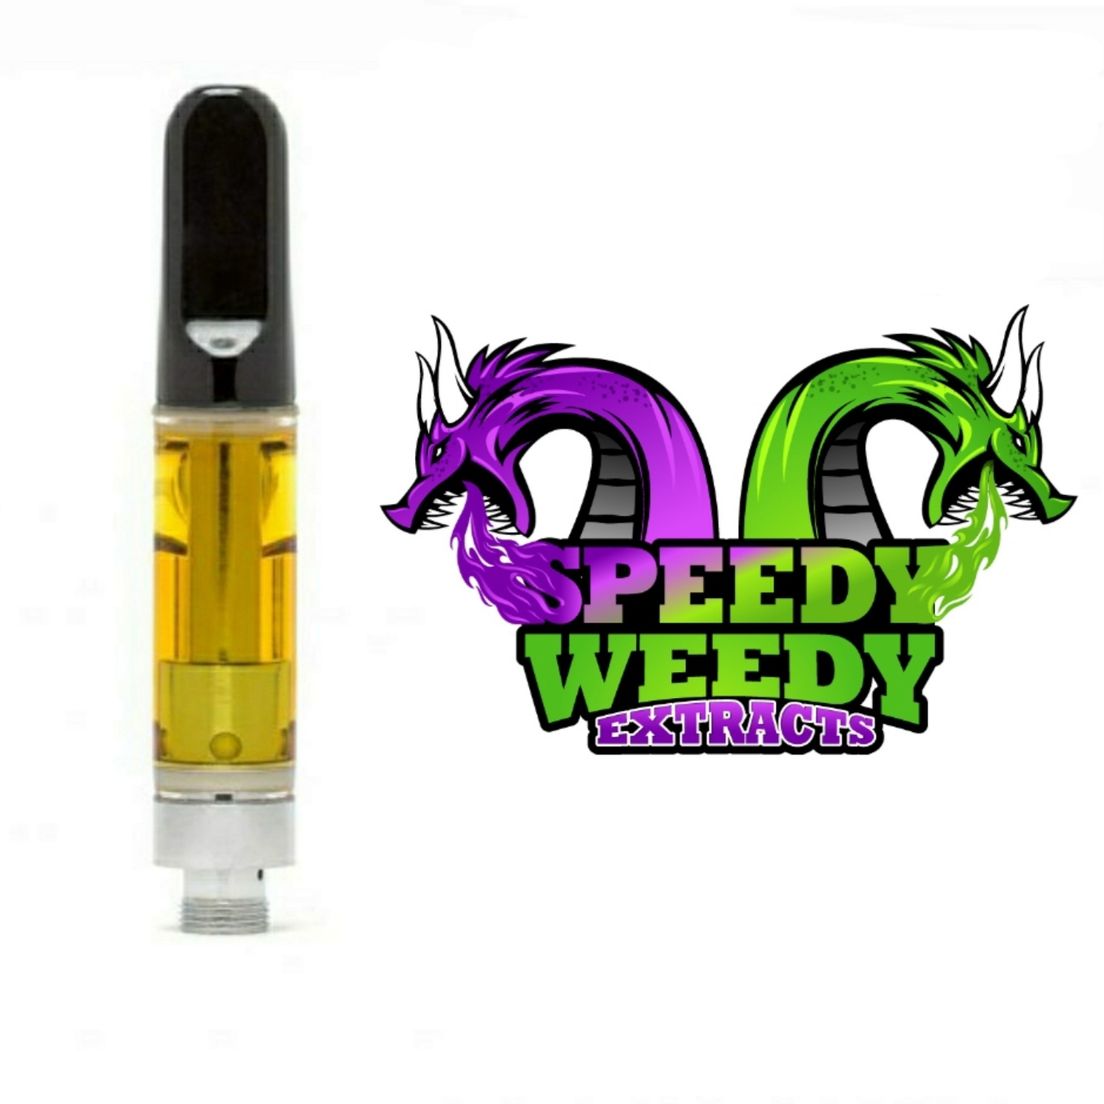 1. Speedy Weedy 1g THC Vape Cartridge - Acapulco Gold (S)